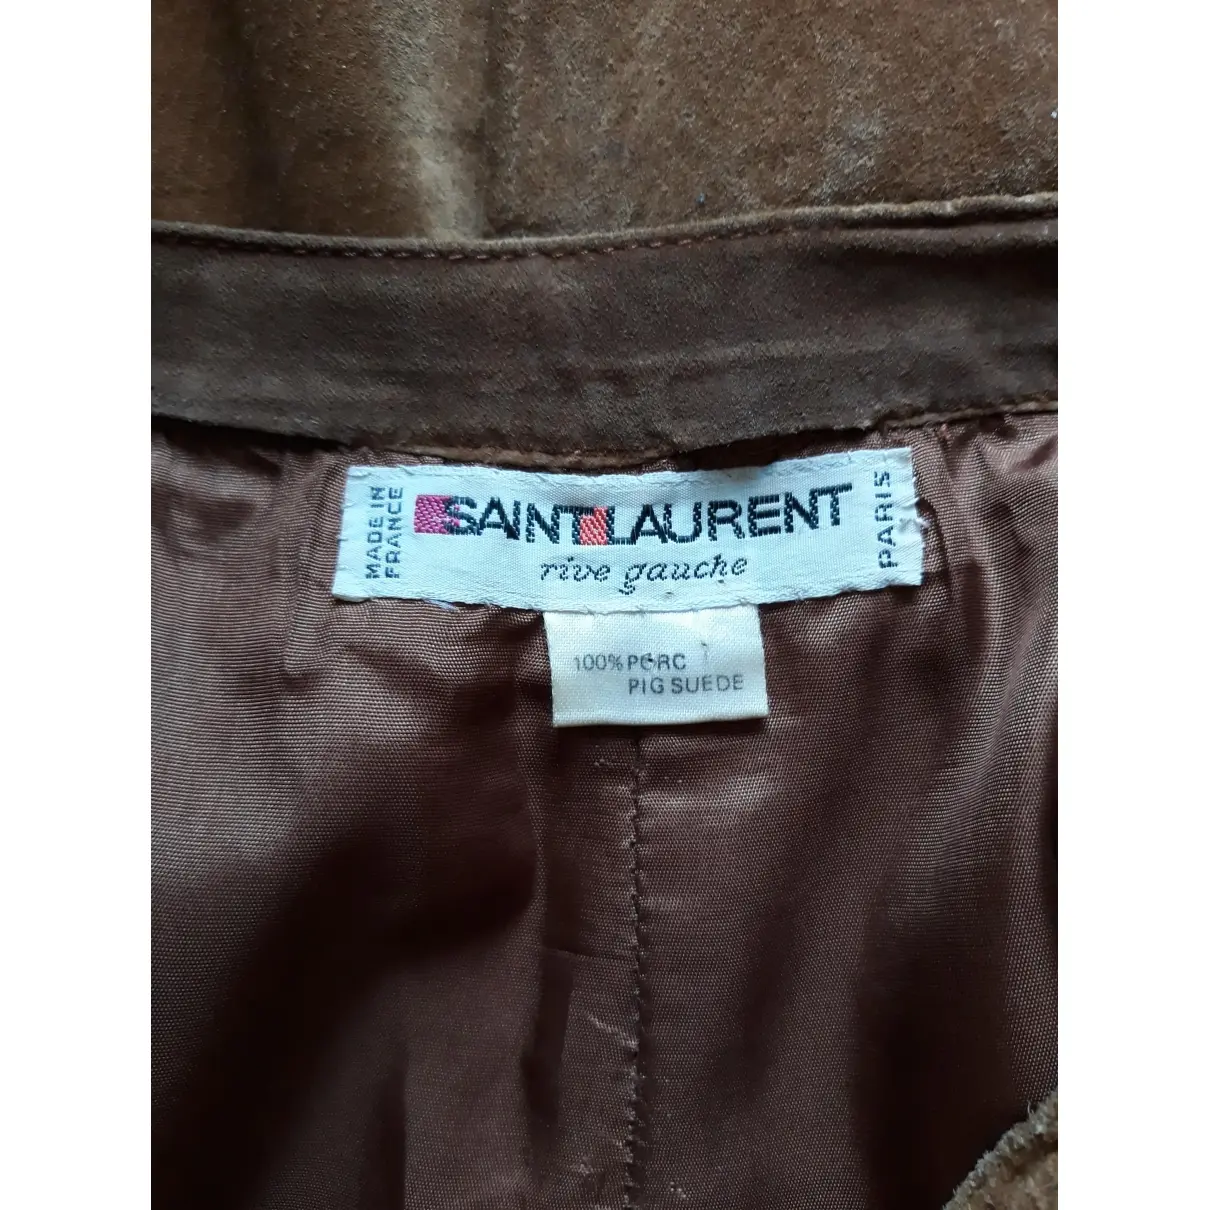 Buy Yves Saint Laurent Leather mid-length skirt online - Vintage